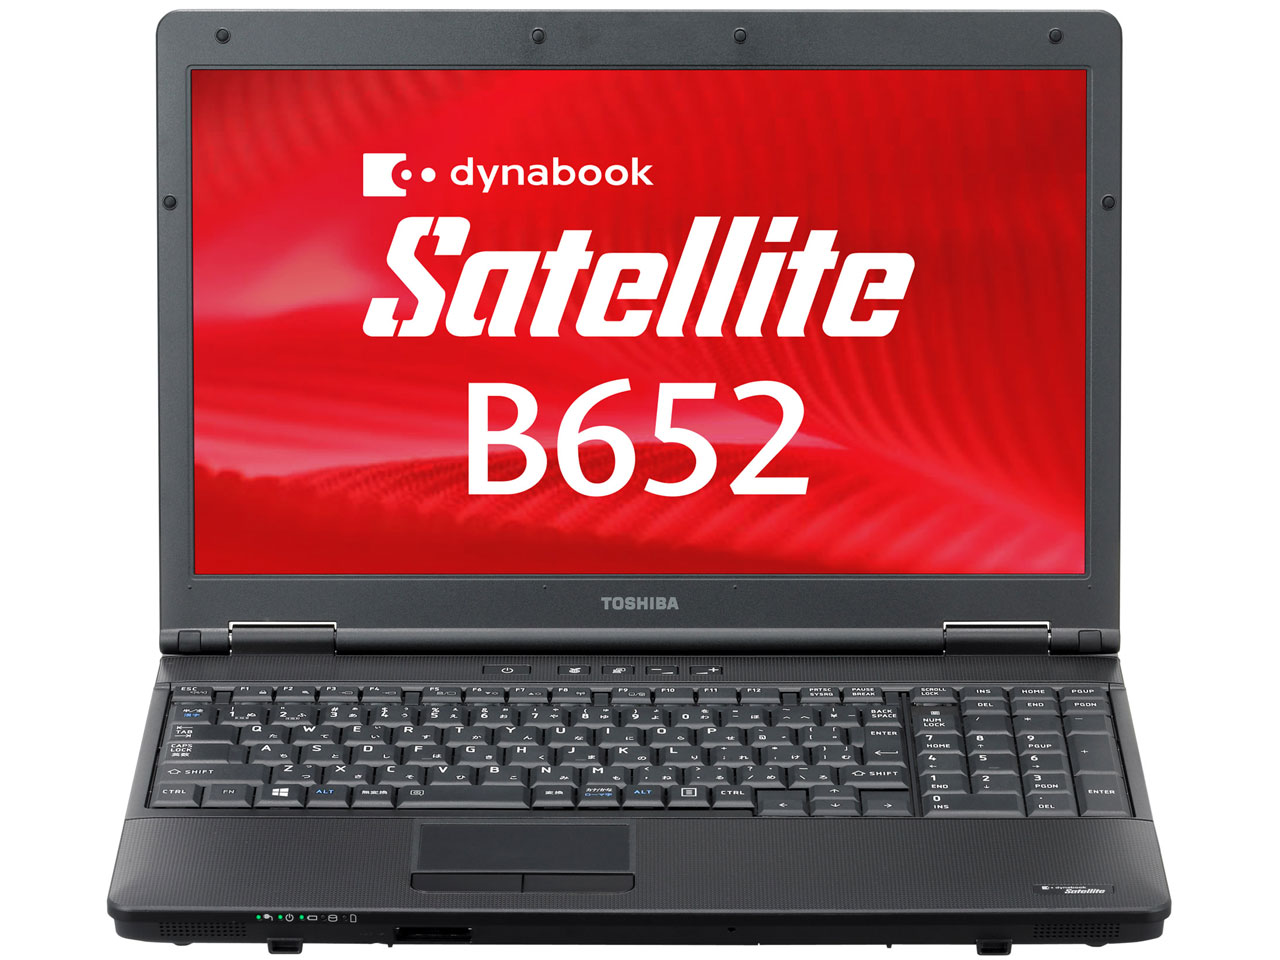 dynabook Satellite B652 B652/H PB652HBPPKEA71